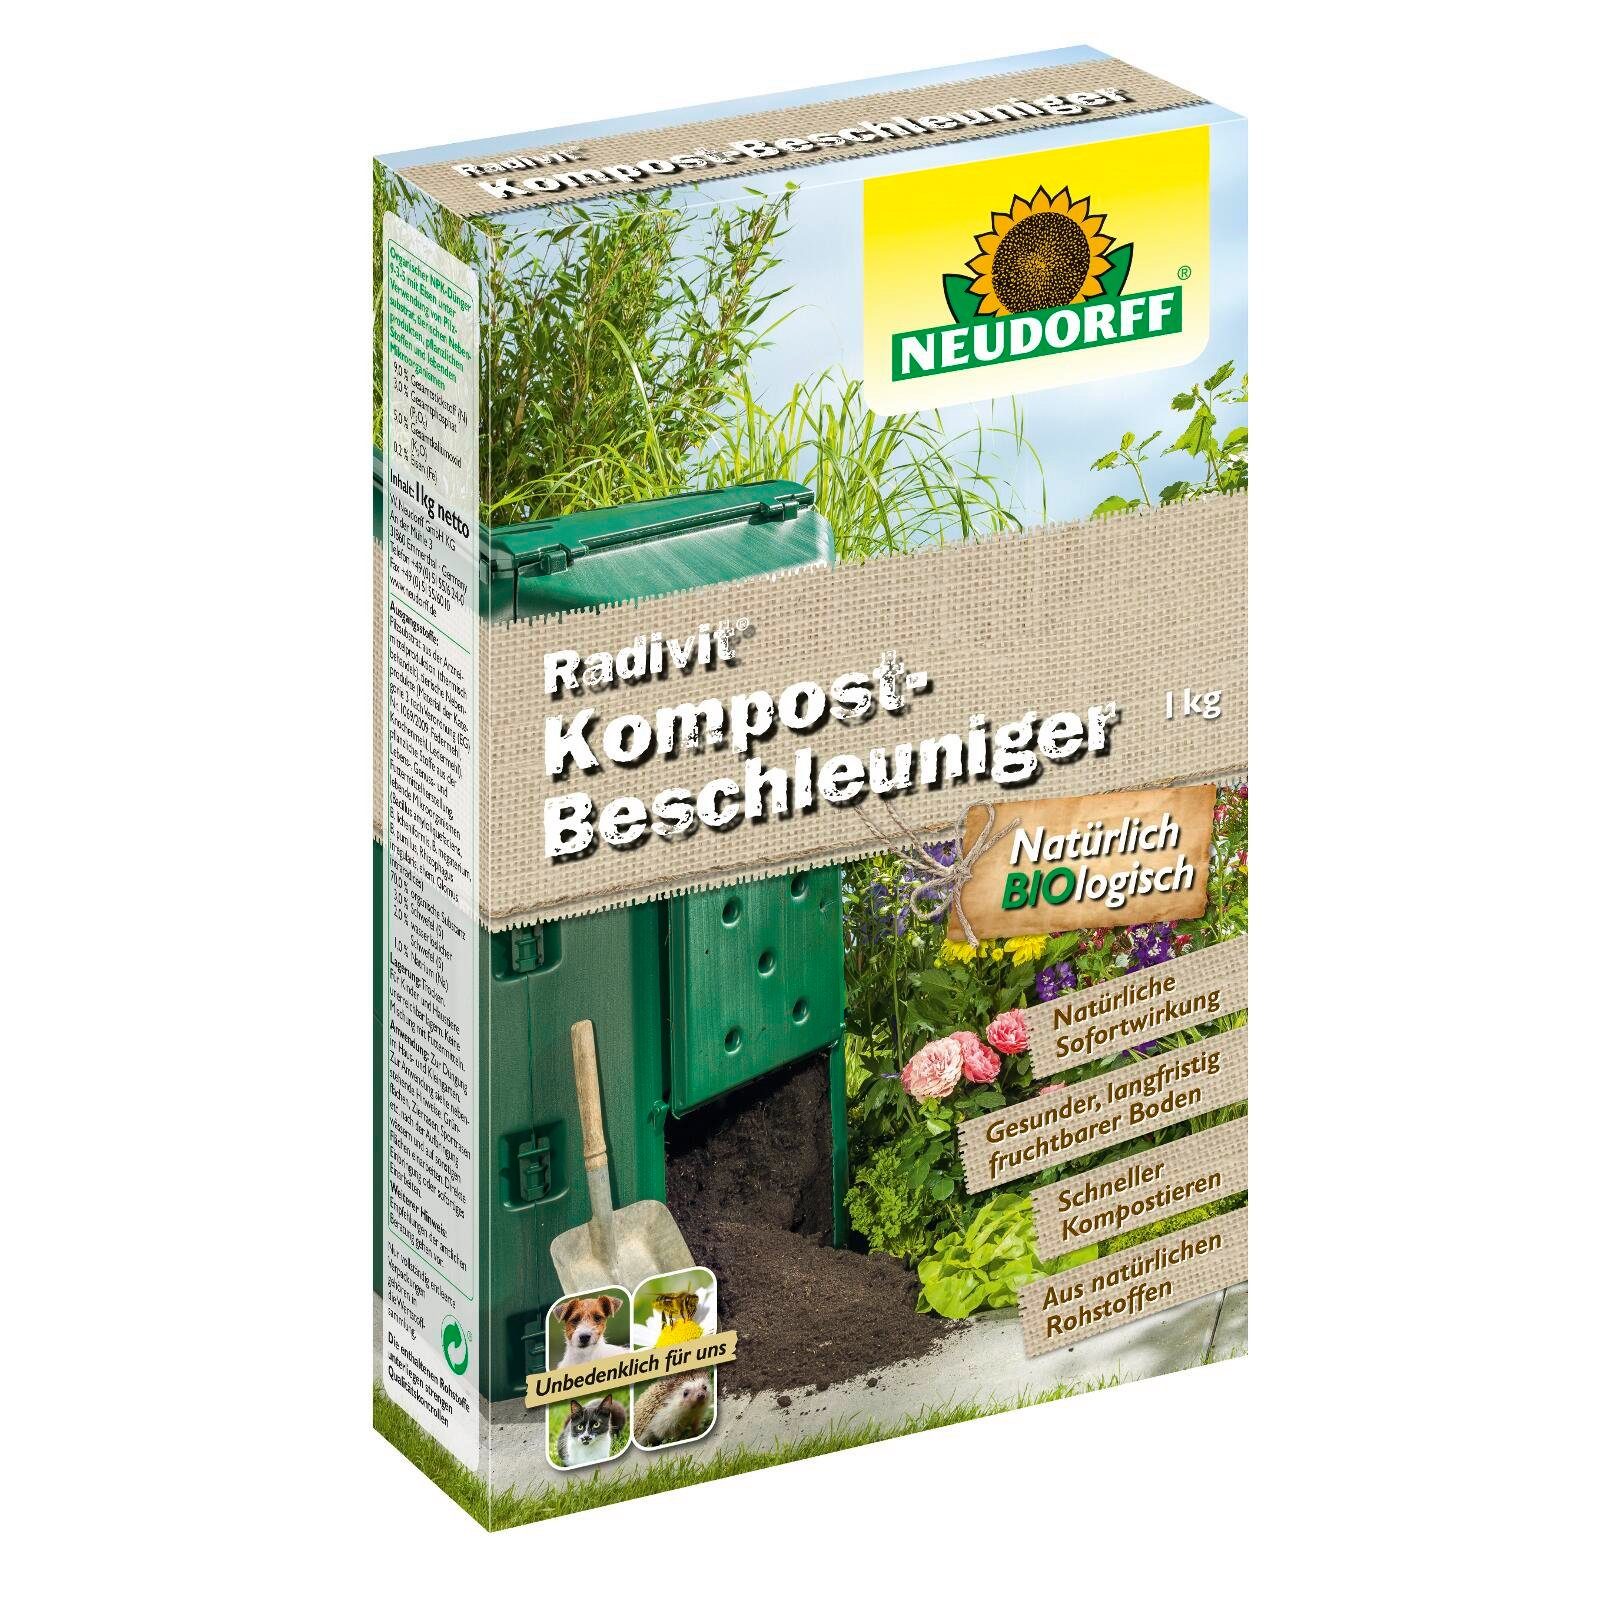 Neudorff Thermokomposter Neudorff 1 Kompost-Beschleuniger Radivit kg 